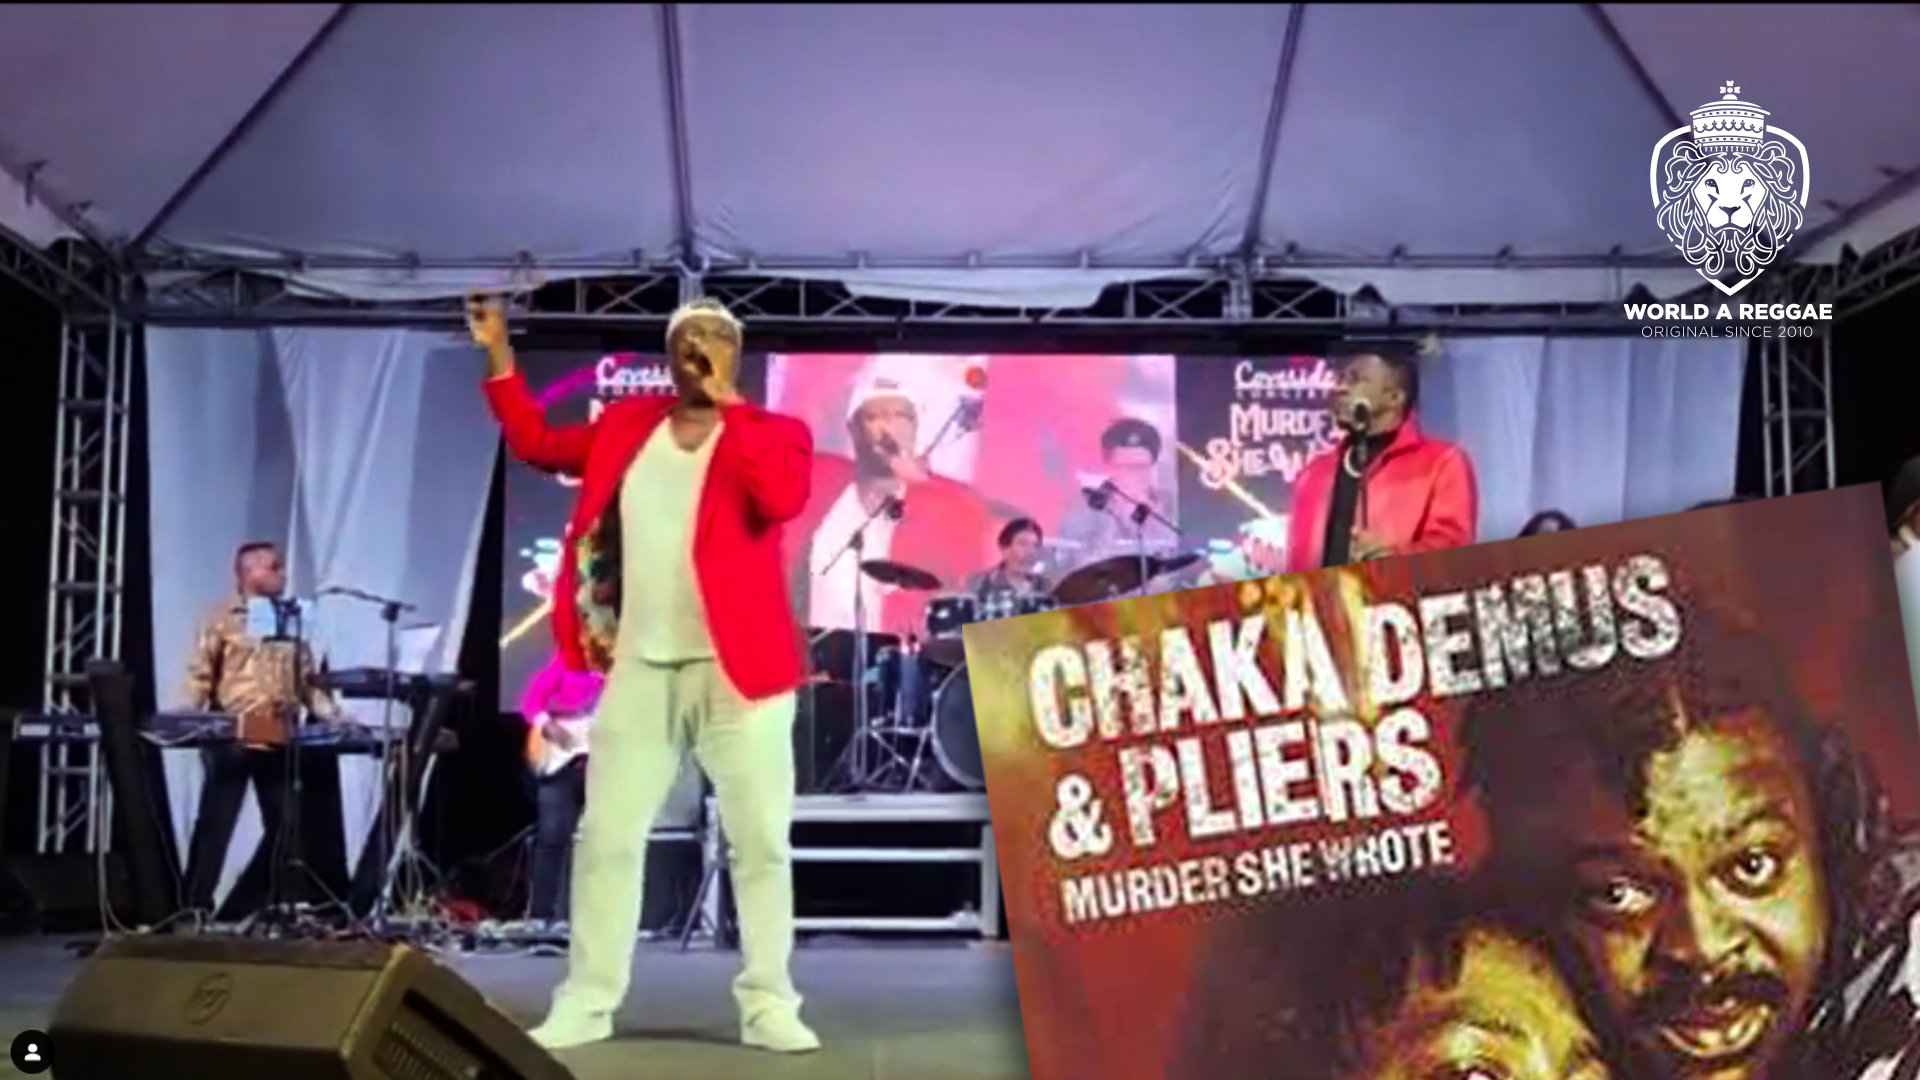 chaka-demus-pliers-murder-she-wrote-celebrates-30th-anniversary-world-a-reggae